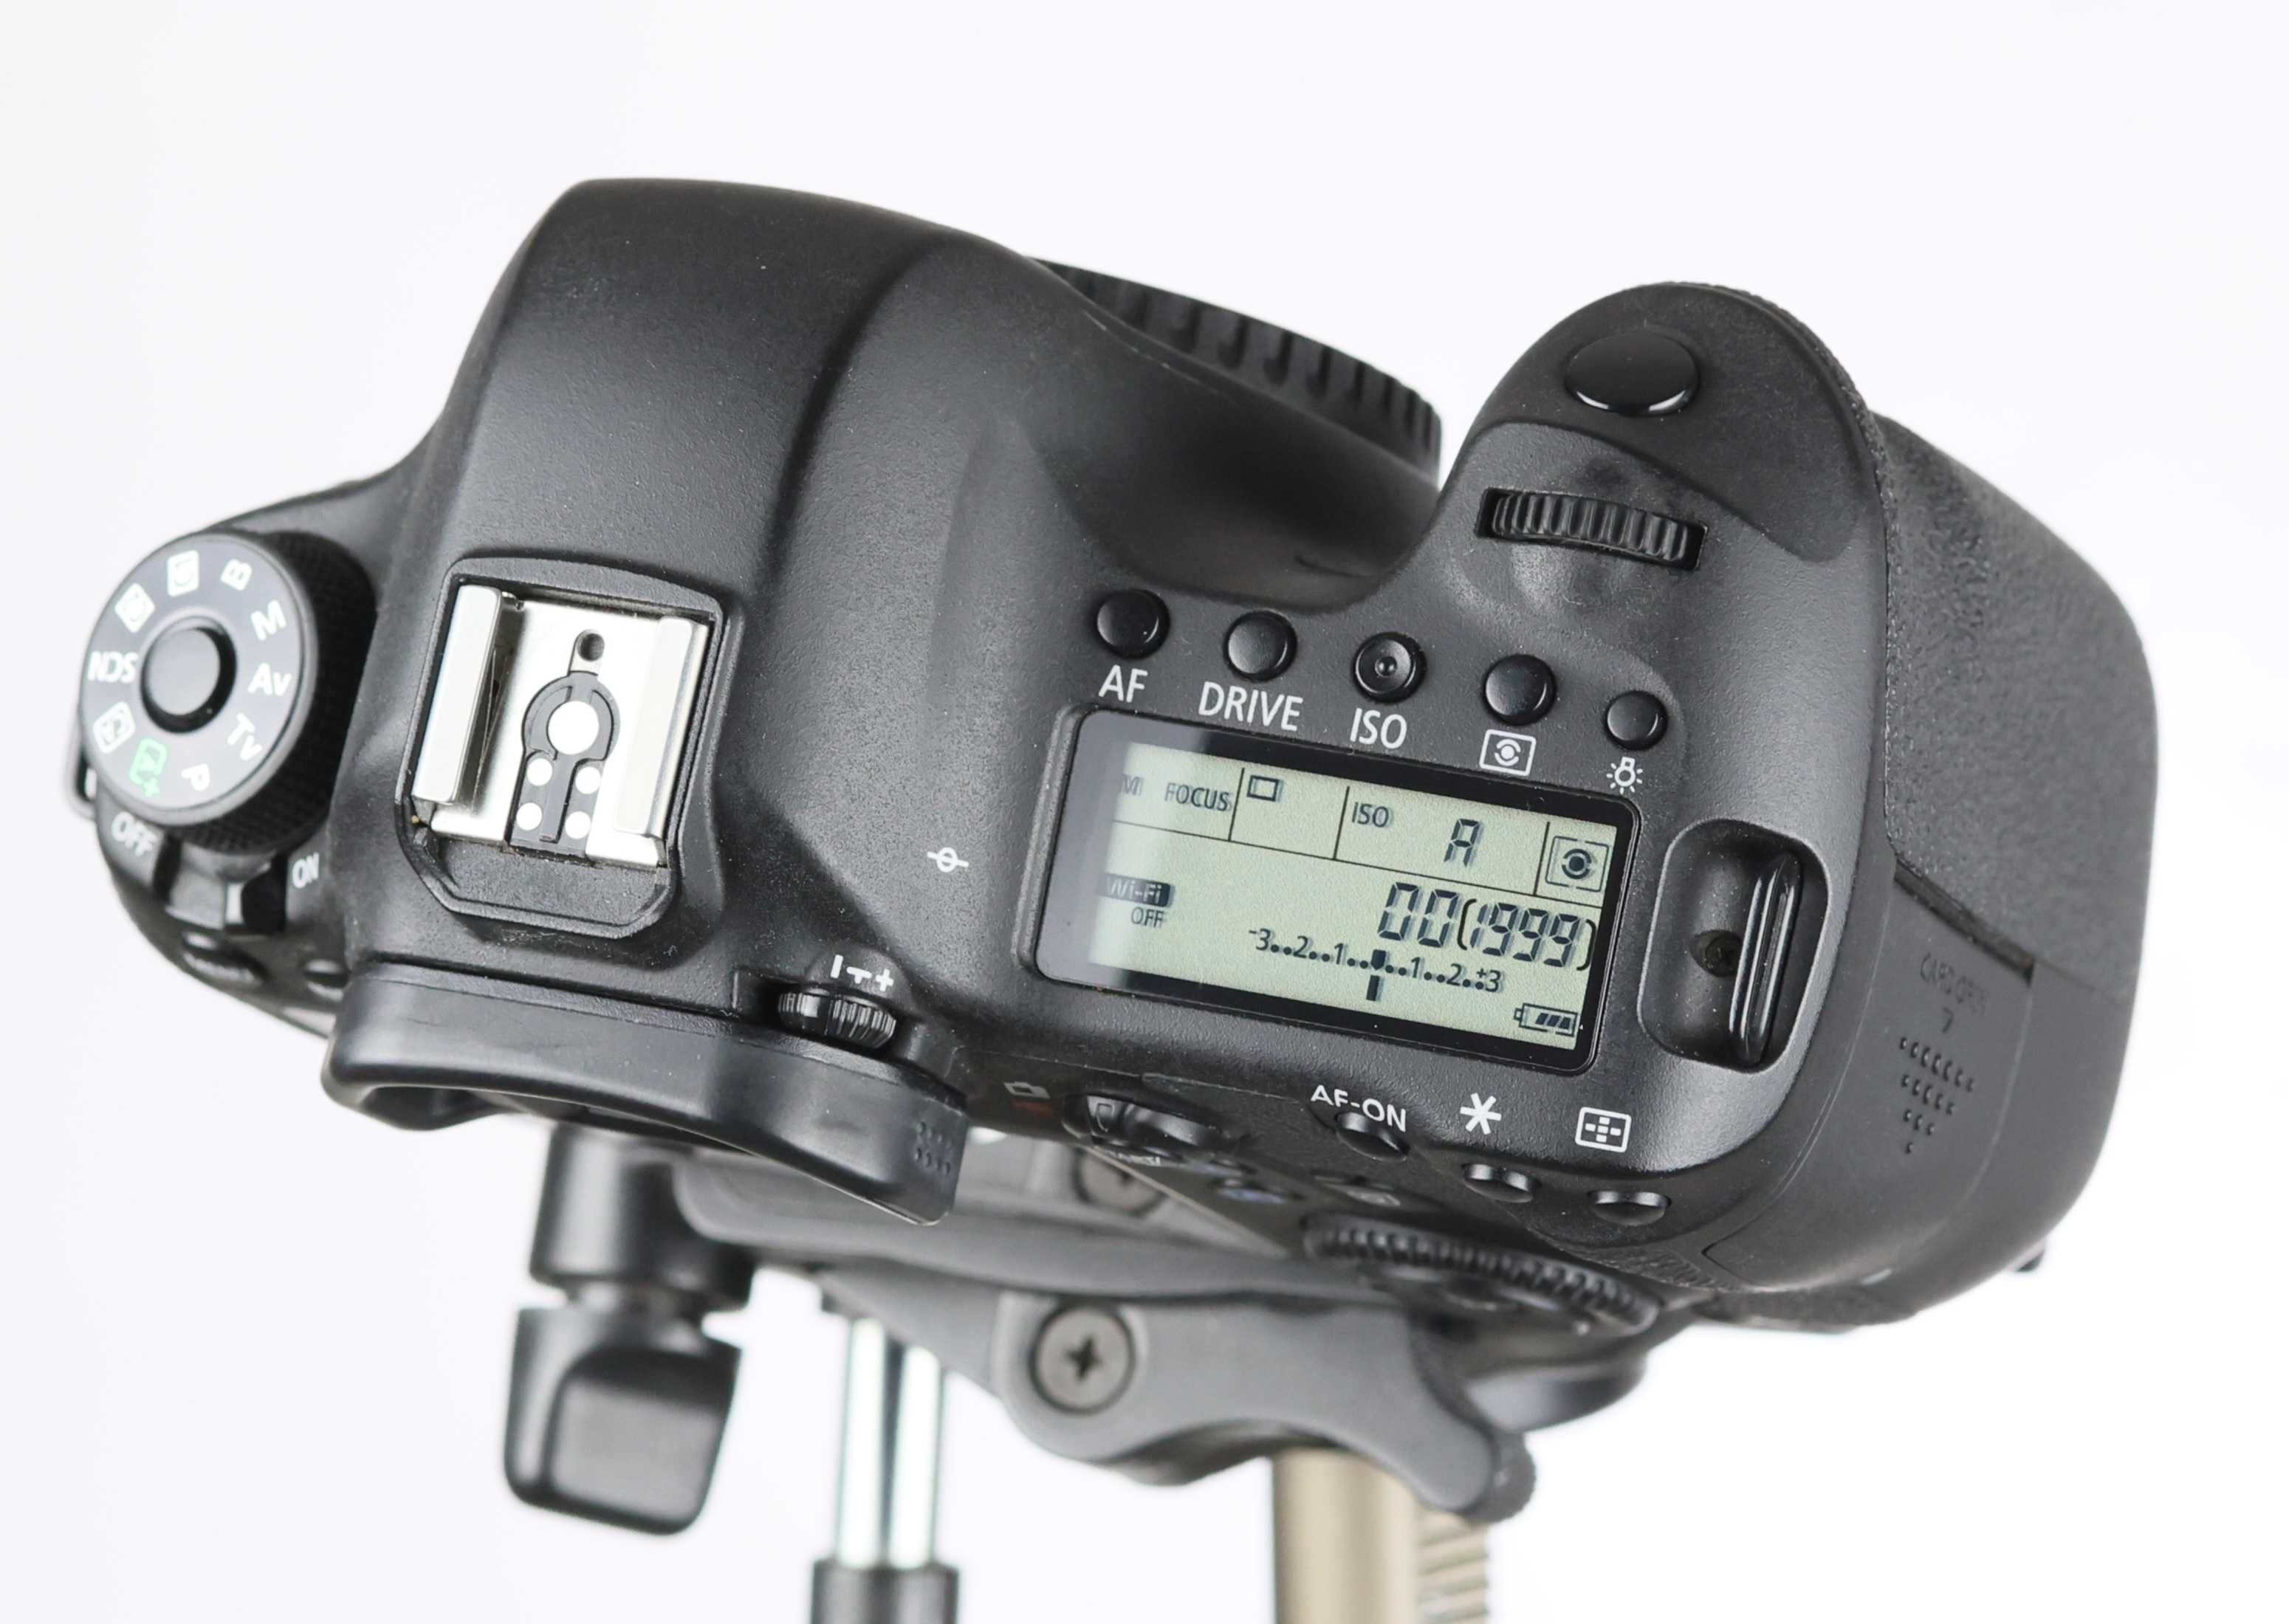 Canon EOS 6D com EF 24-105f4 L IS